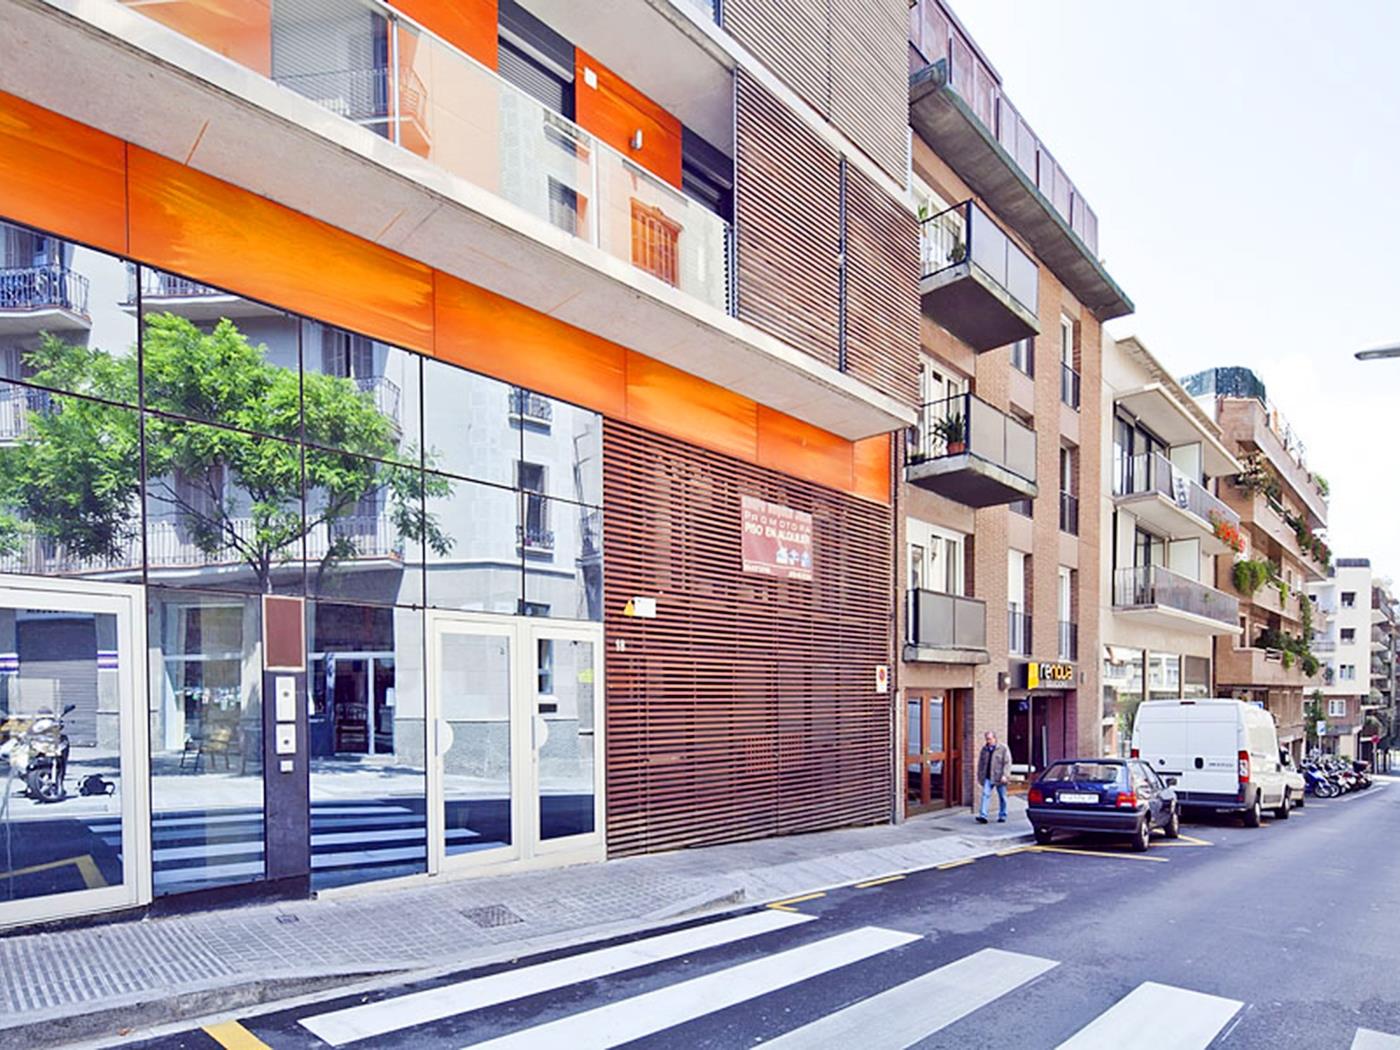 My Space Barcelona Executive Corporate Apartment Rentals in Barcelona for 6 - My Space barcelona Apartments